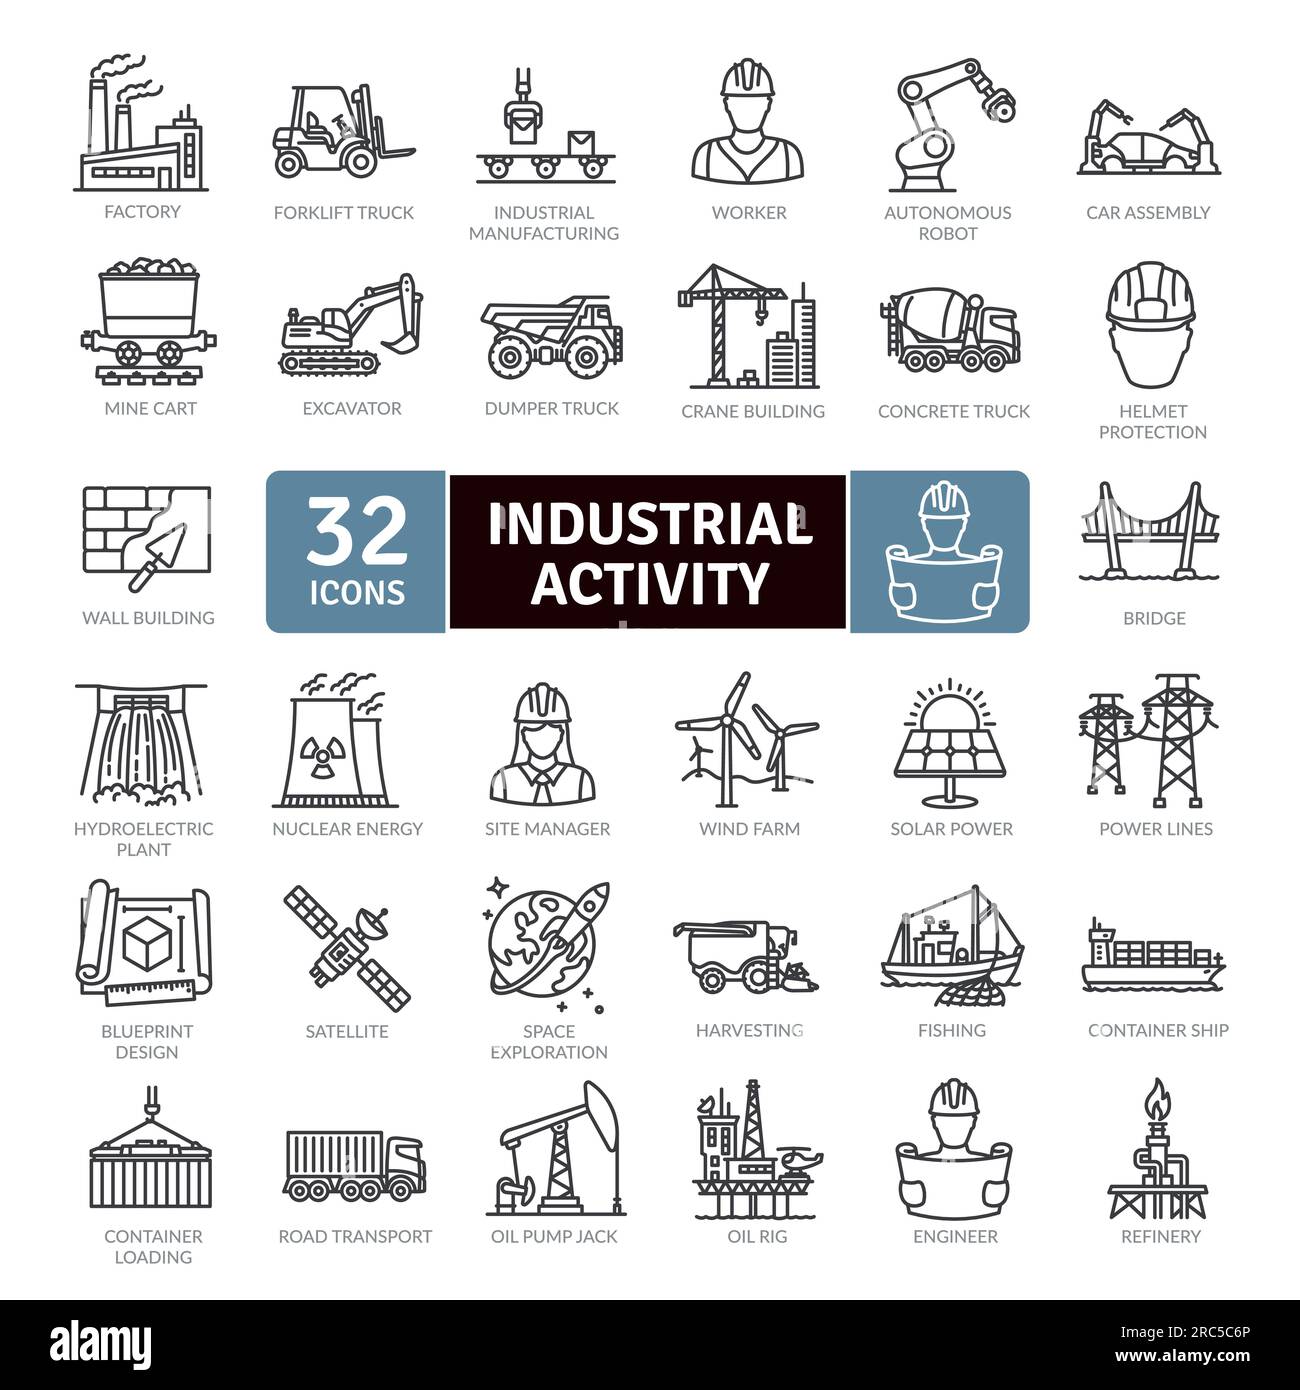 Icons für industrielle Aktivitäten. Thin Line Collection – Smart Technology Icons Stock Vektor